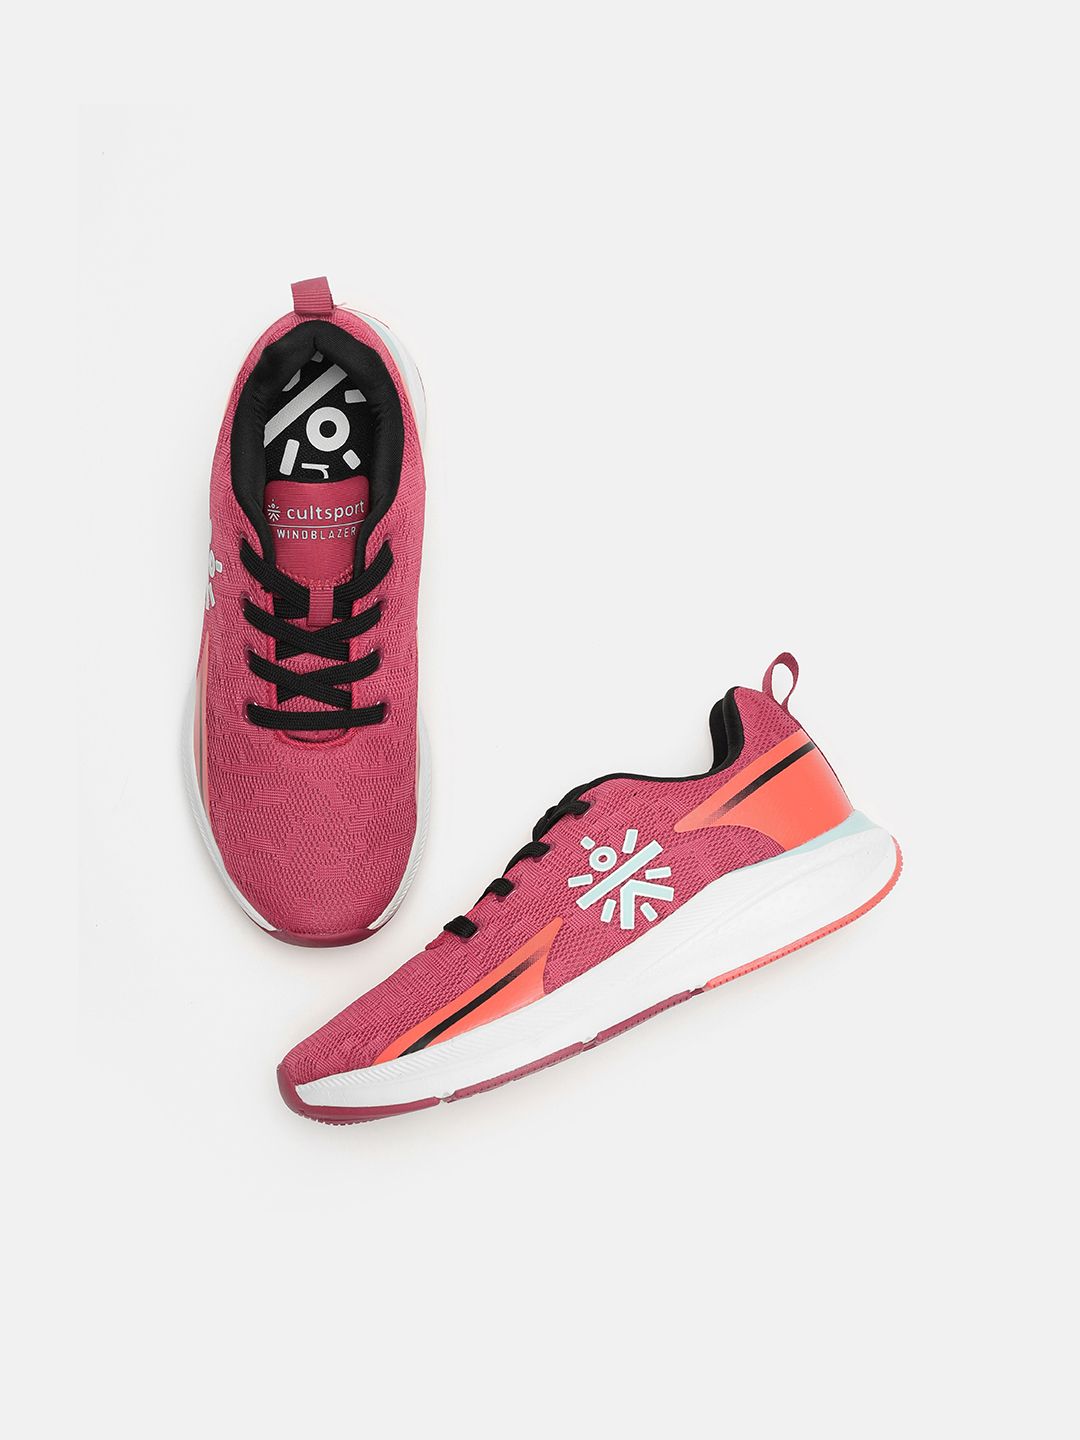 Cultsport Women Red Mesh Windblazer Running Shoes Price in India